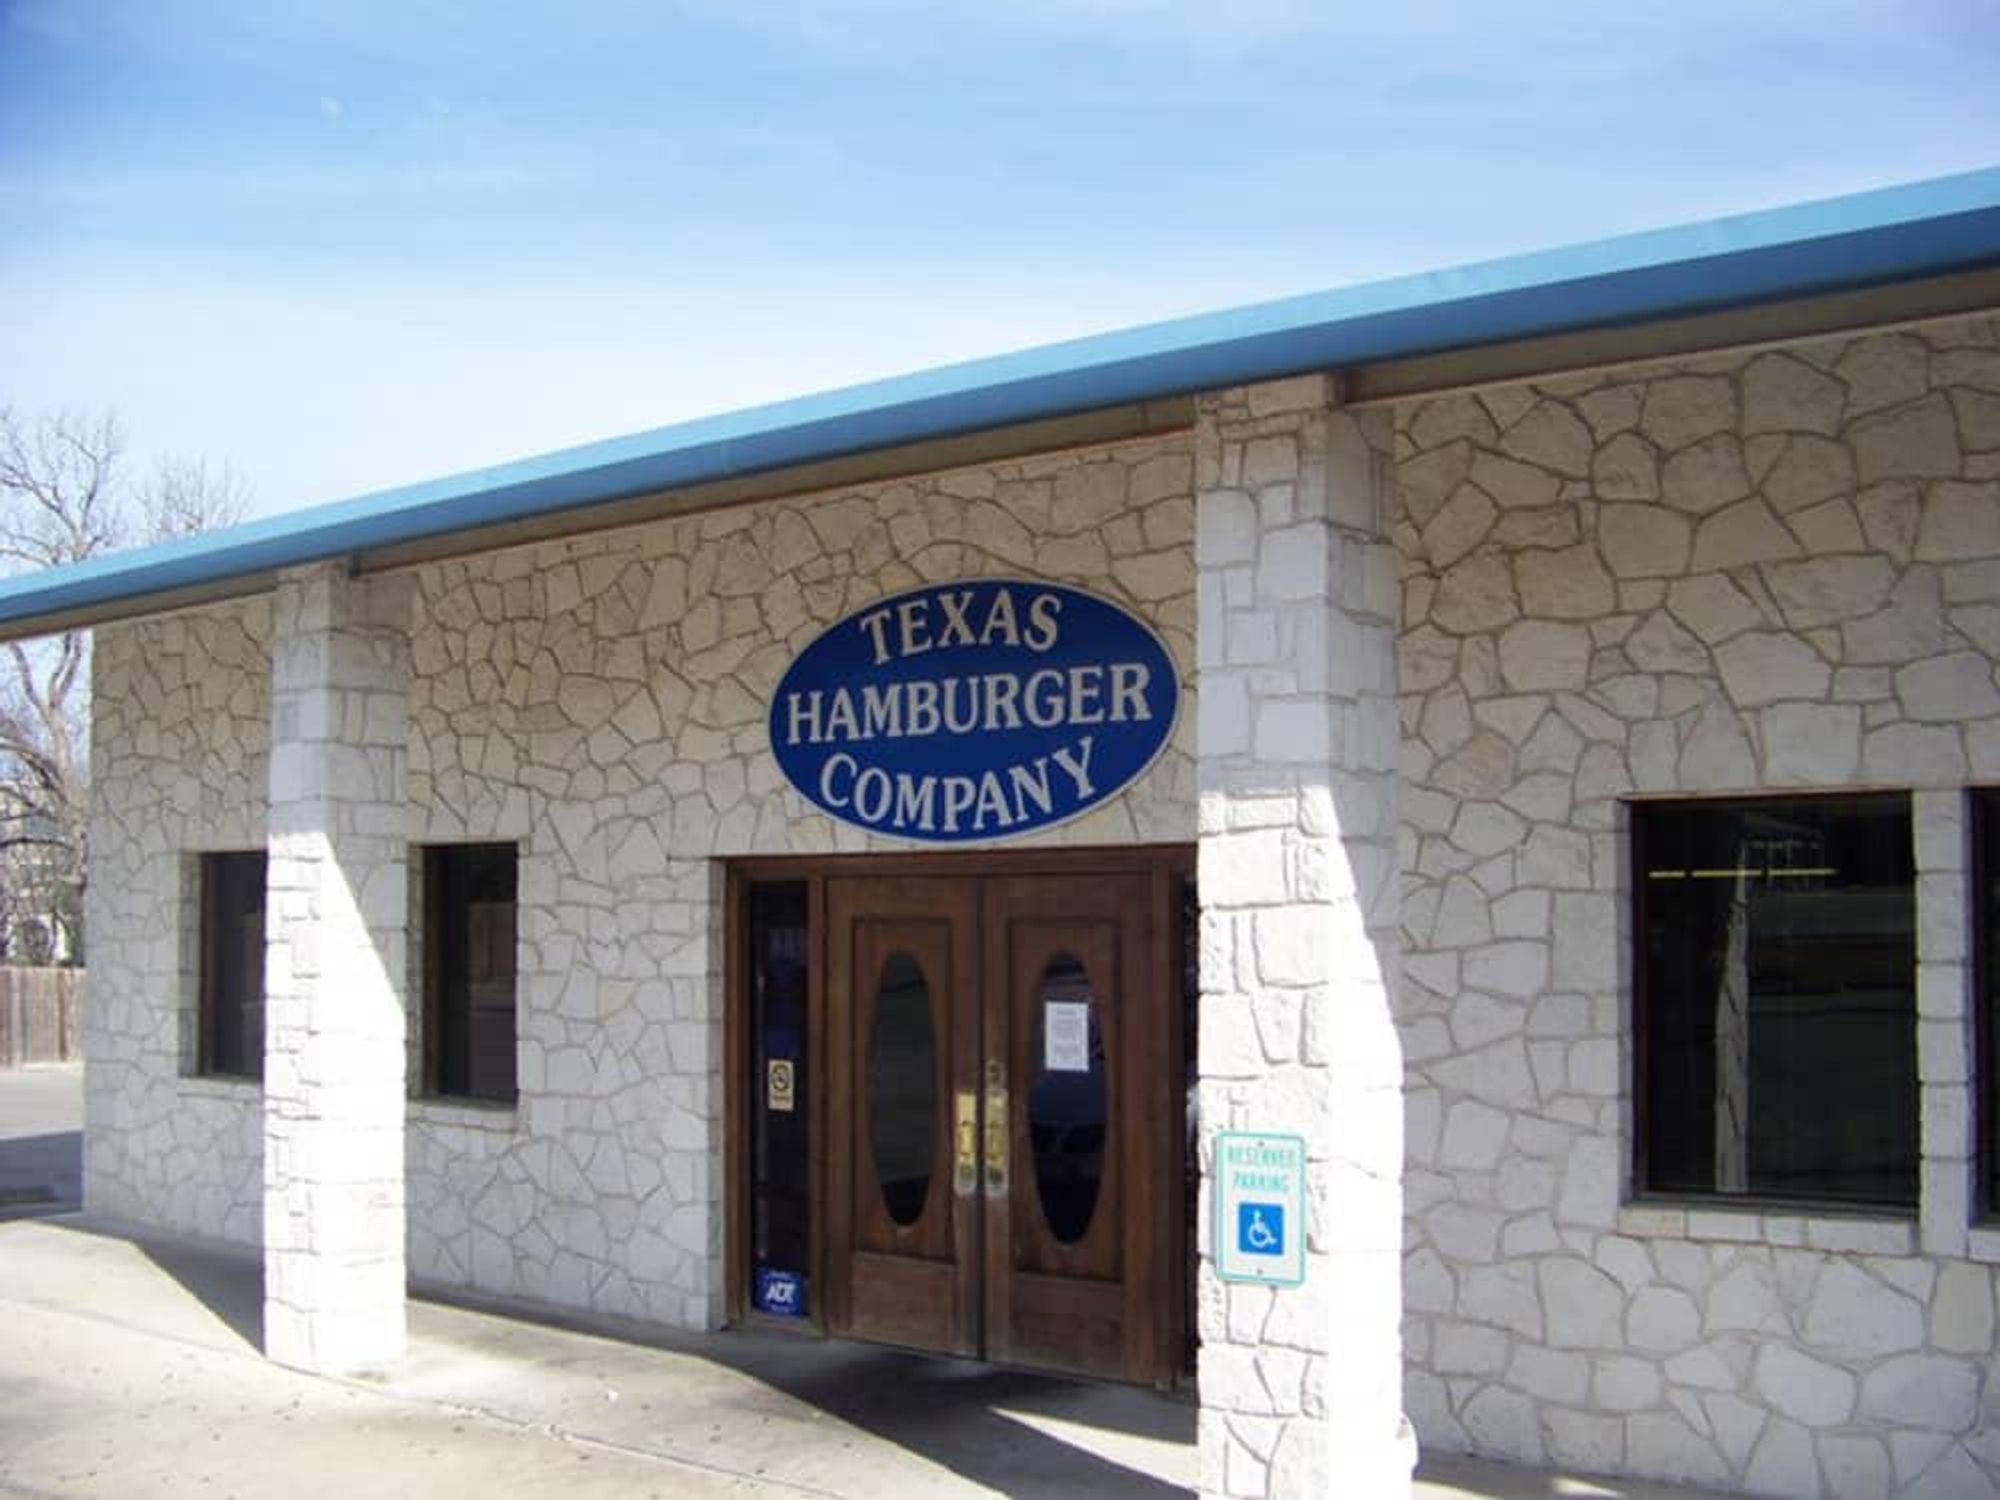 Texas Hamburger Company in San Antonio